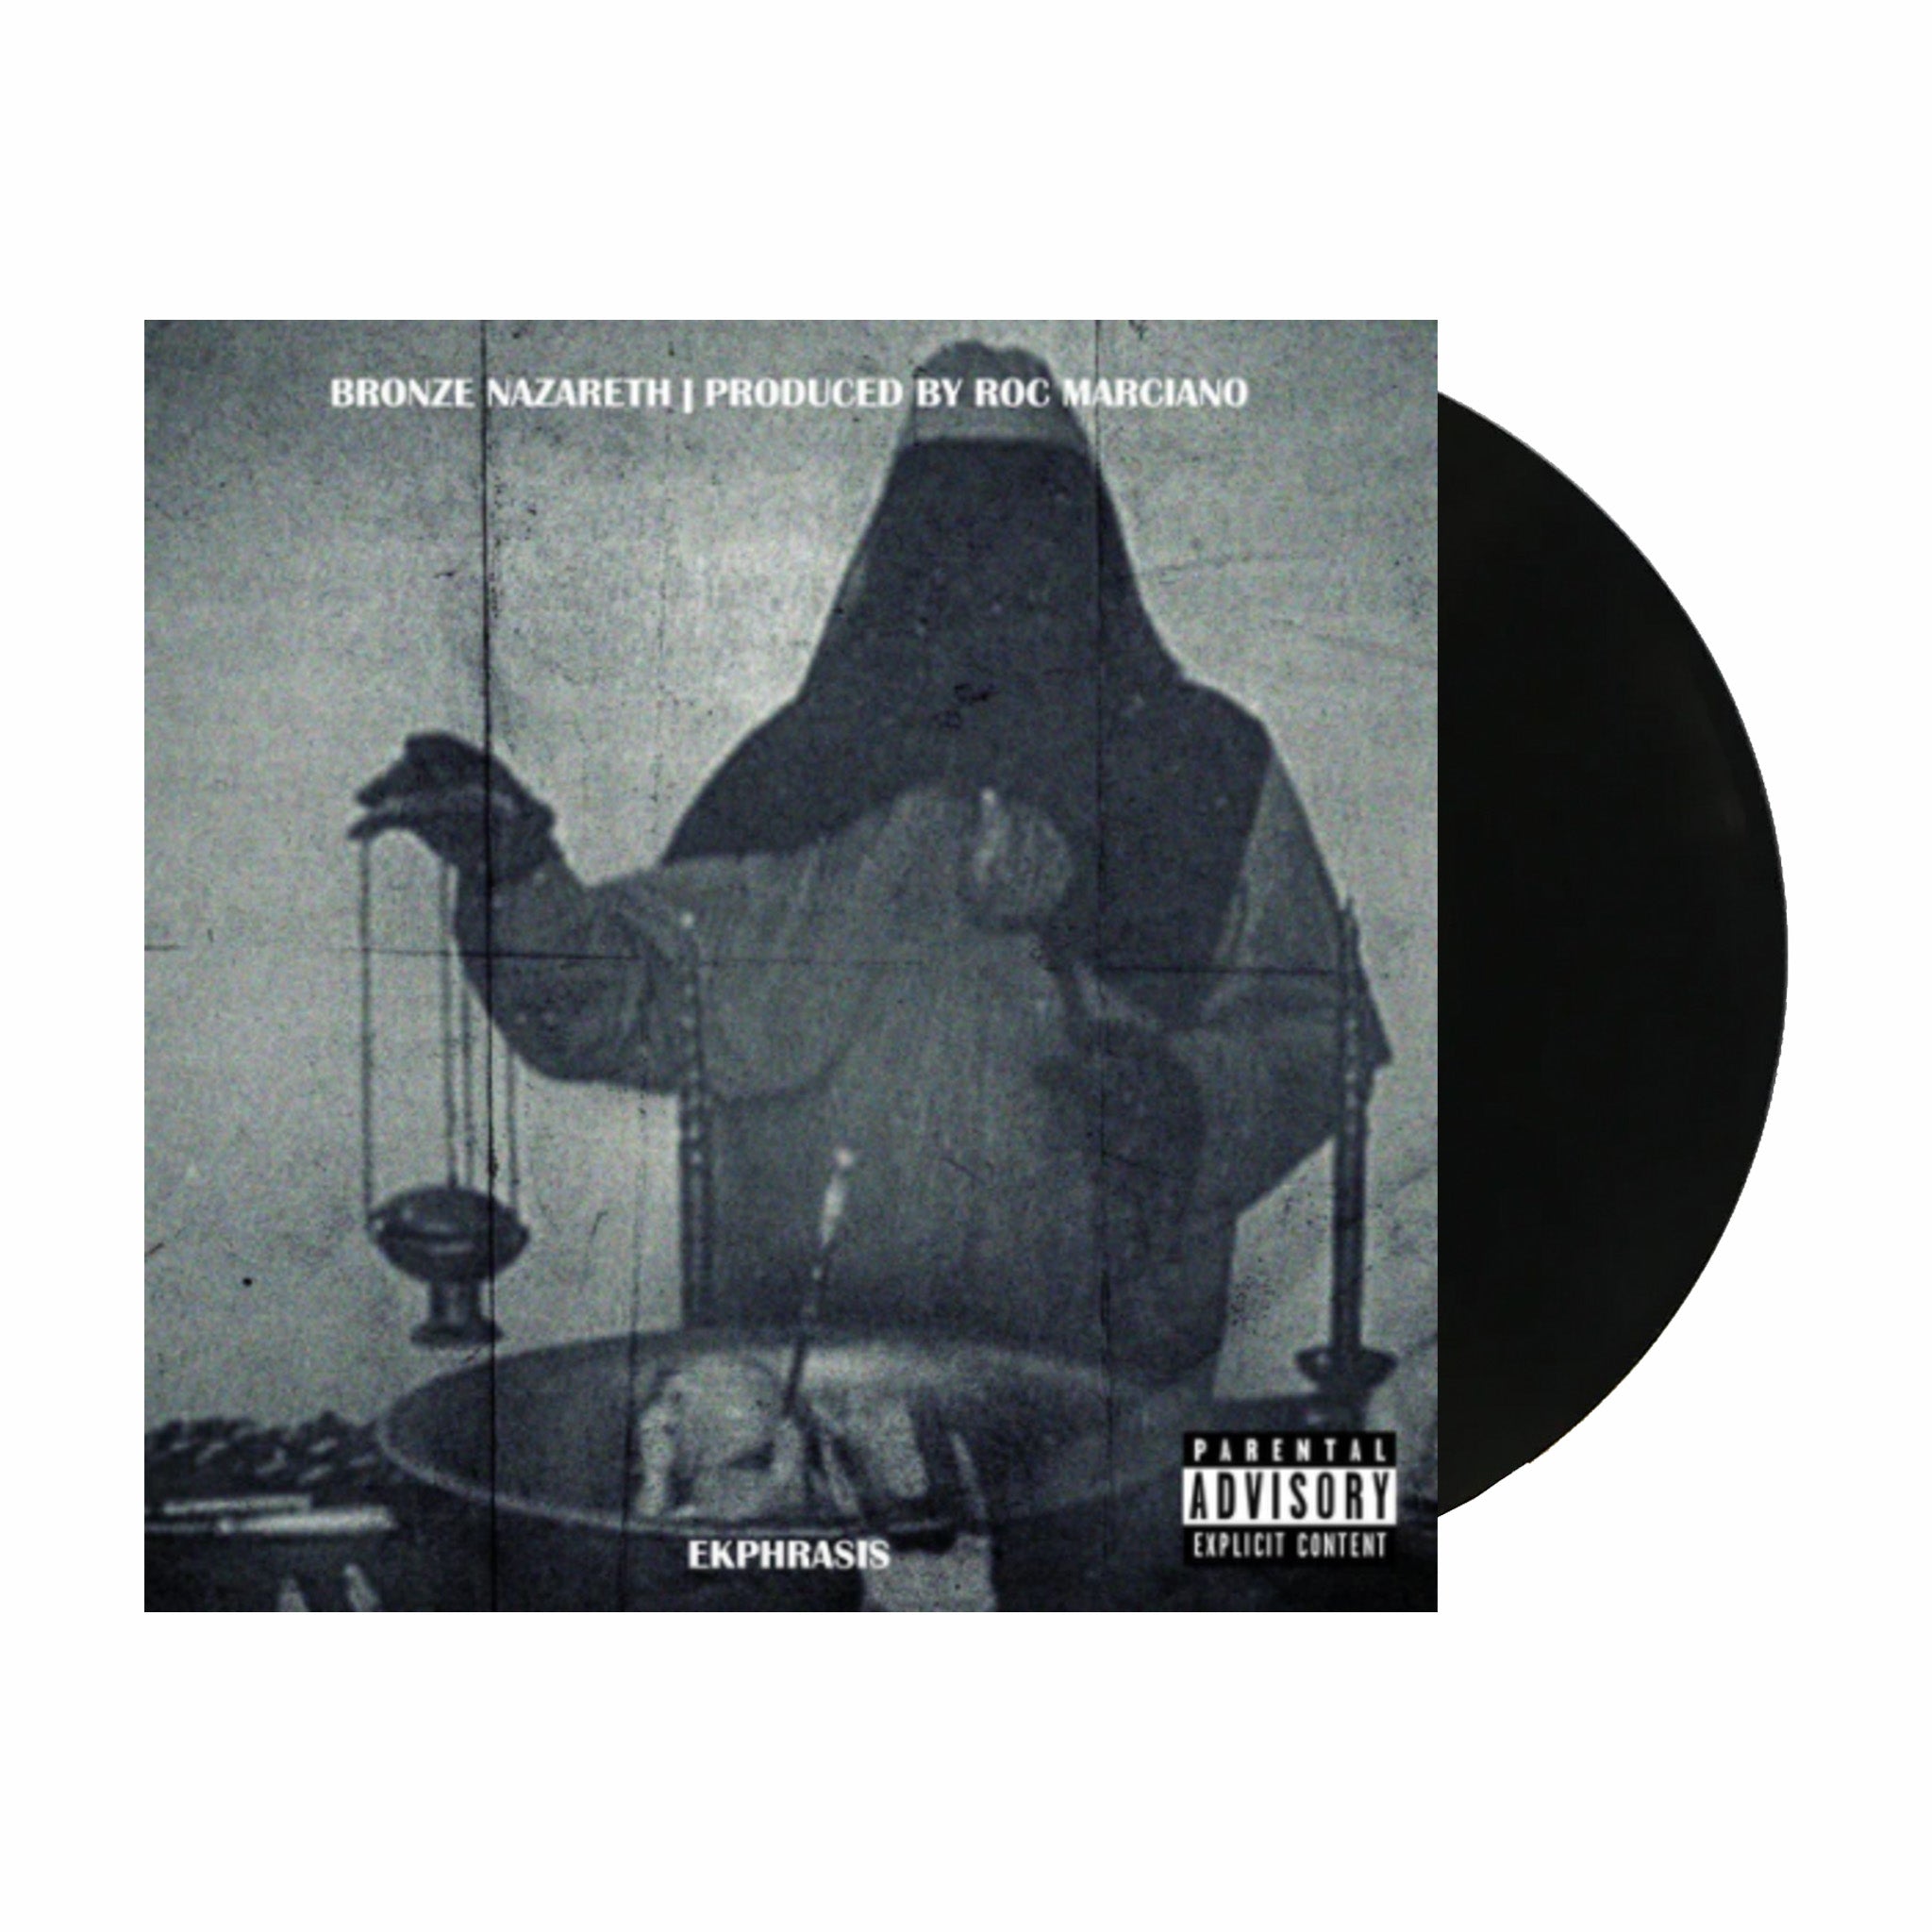 In vinile, Bronzo Nazareth & Roc Marciano "Ekphrasis" LP